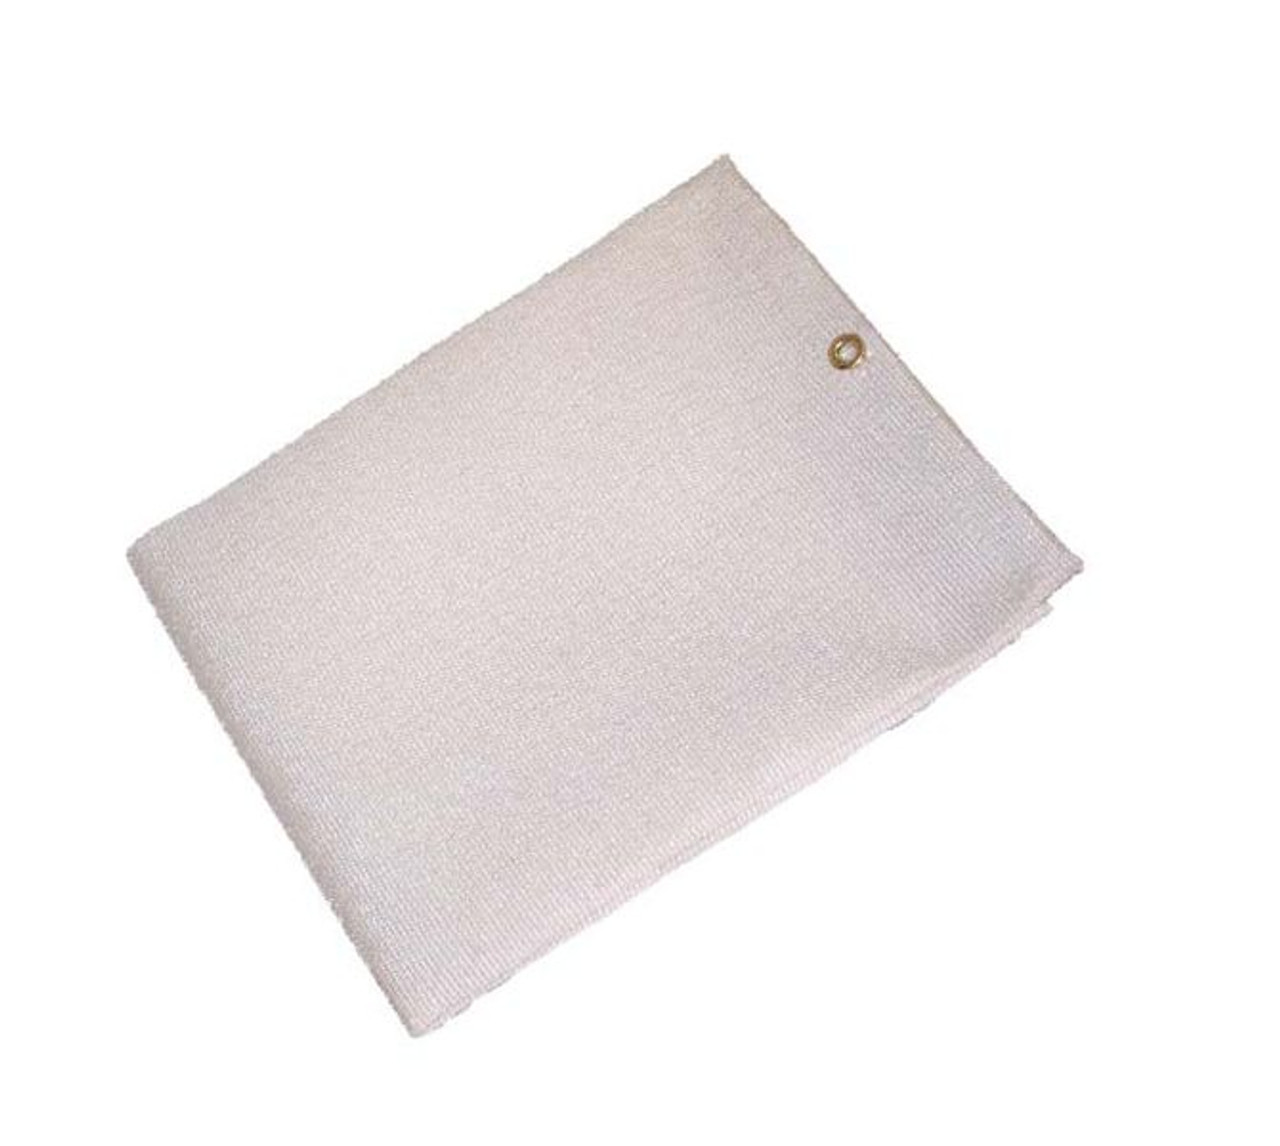 03 x 04 24 oz Insul-Shield Fiberglass Welding Blanket